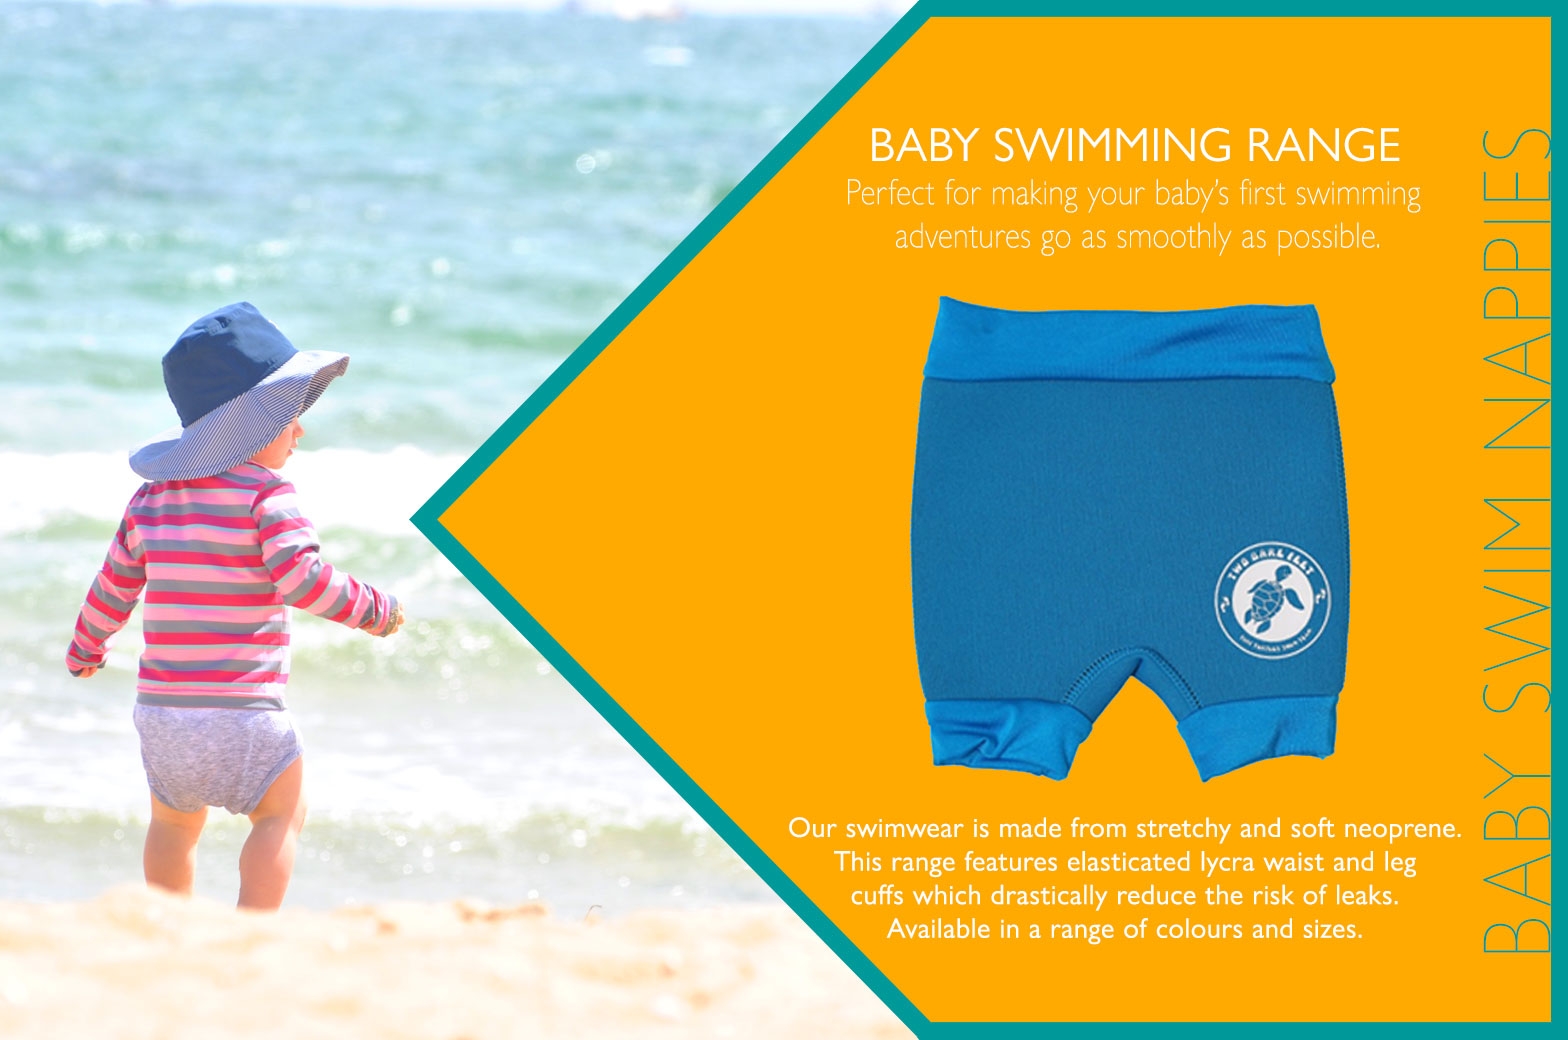 Baby Swim Nappies information